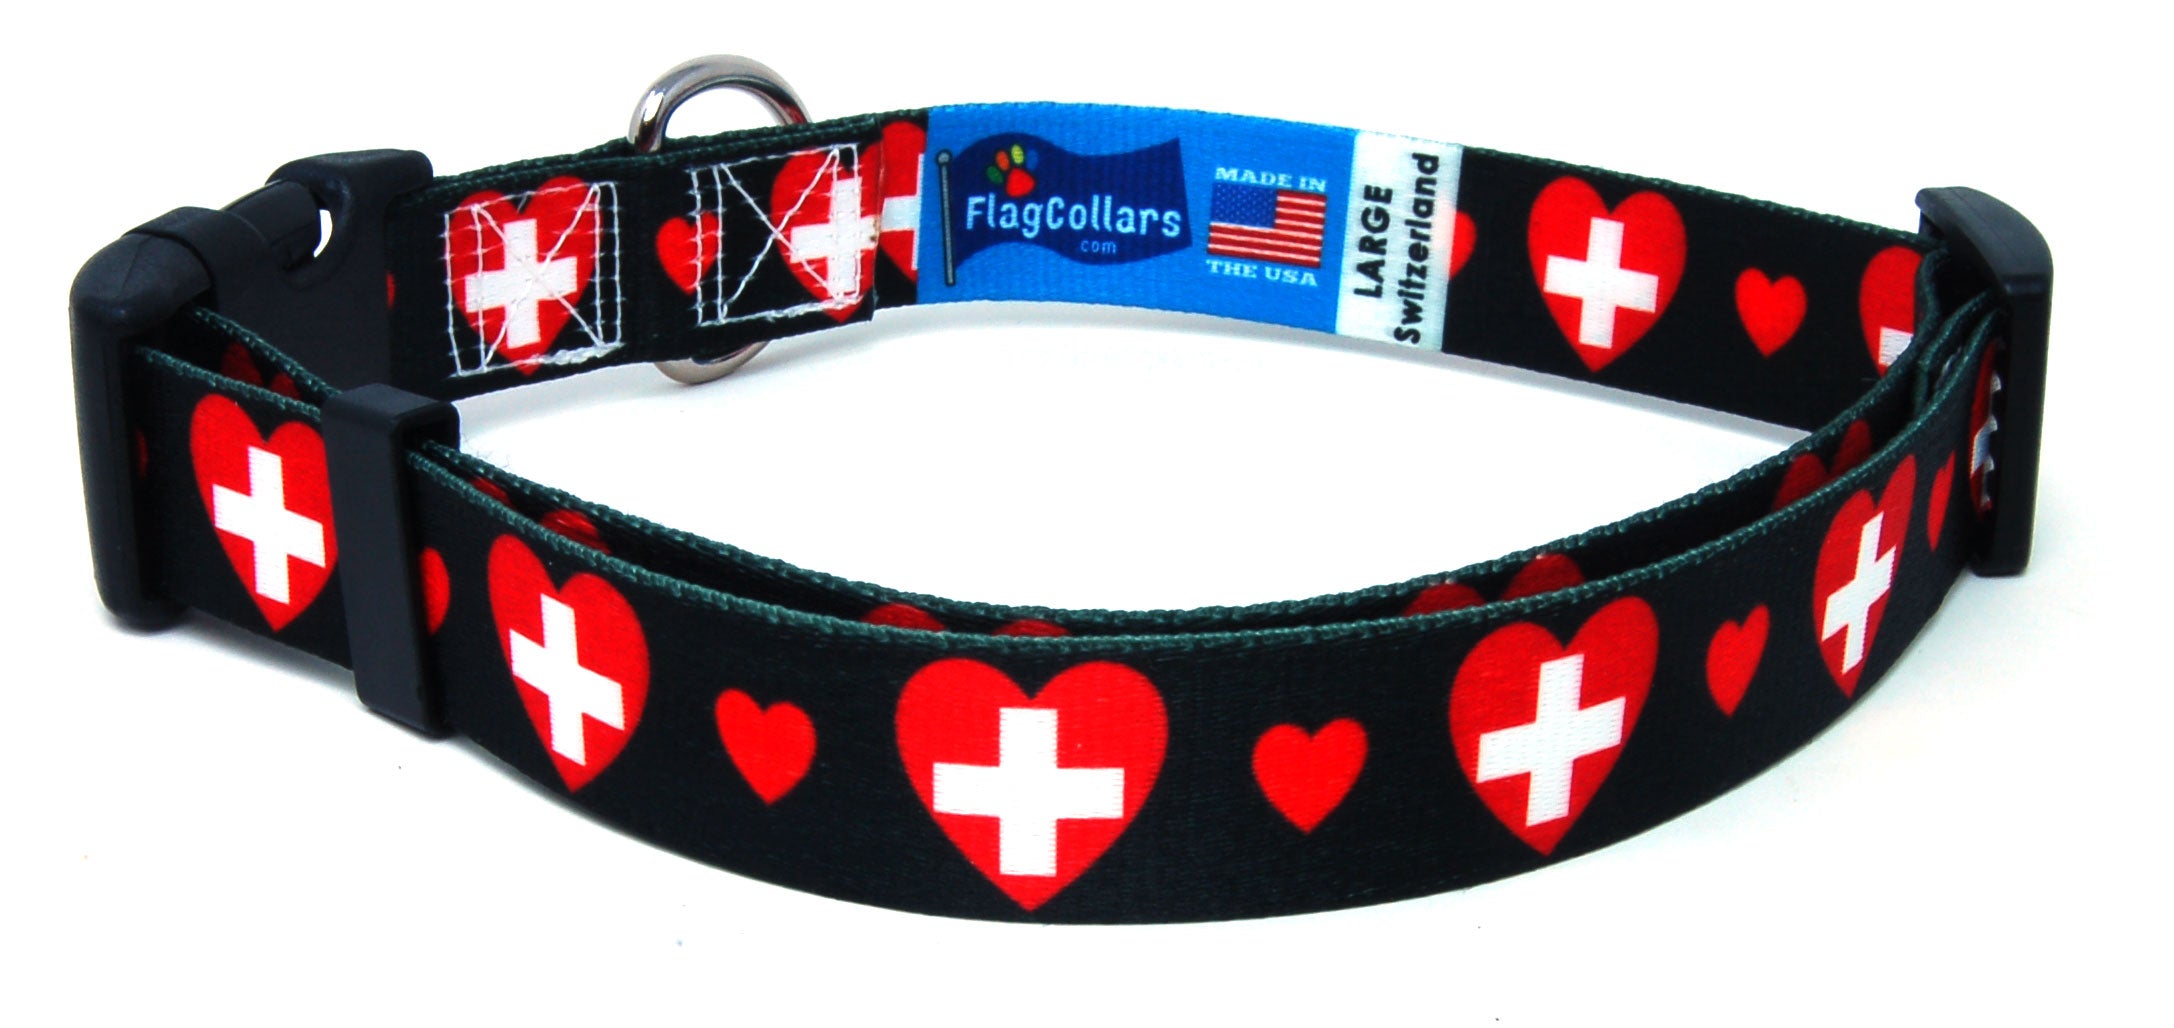 Dog Collar with Switzerland Hearts Pattern | I Love Switzerland